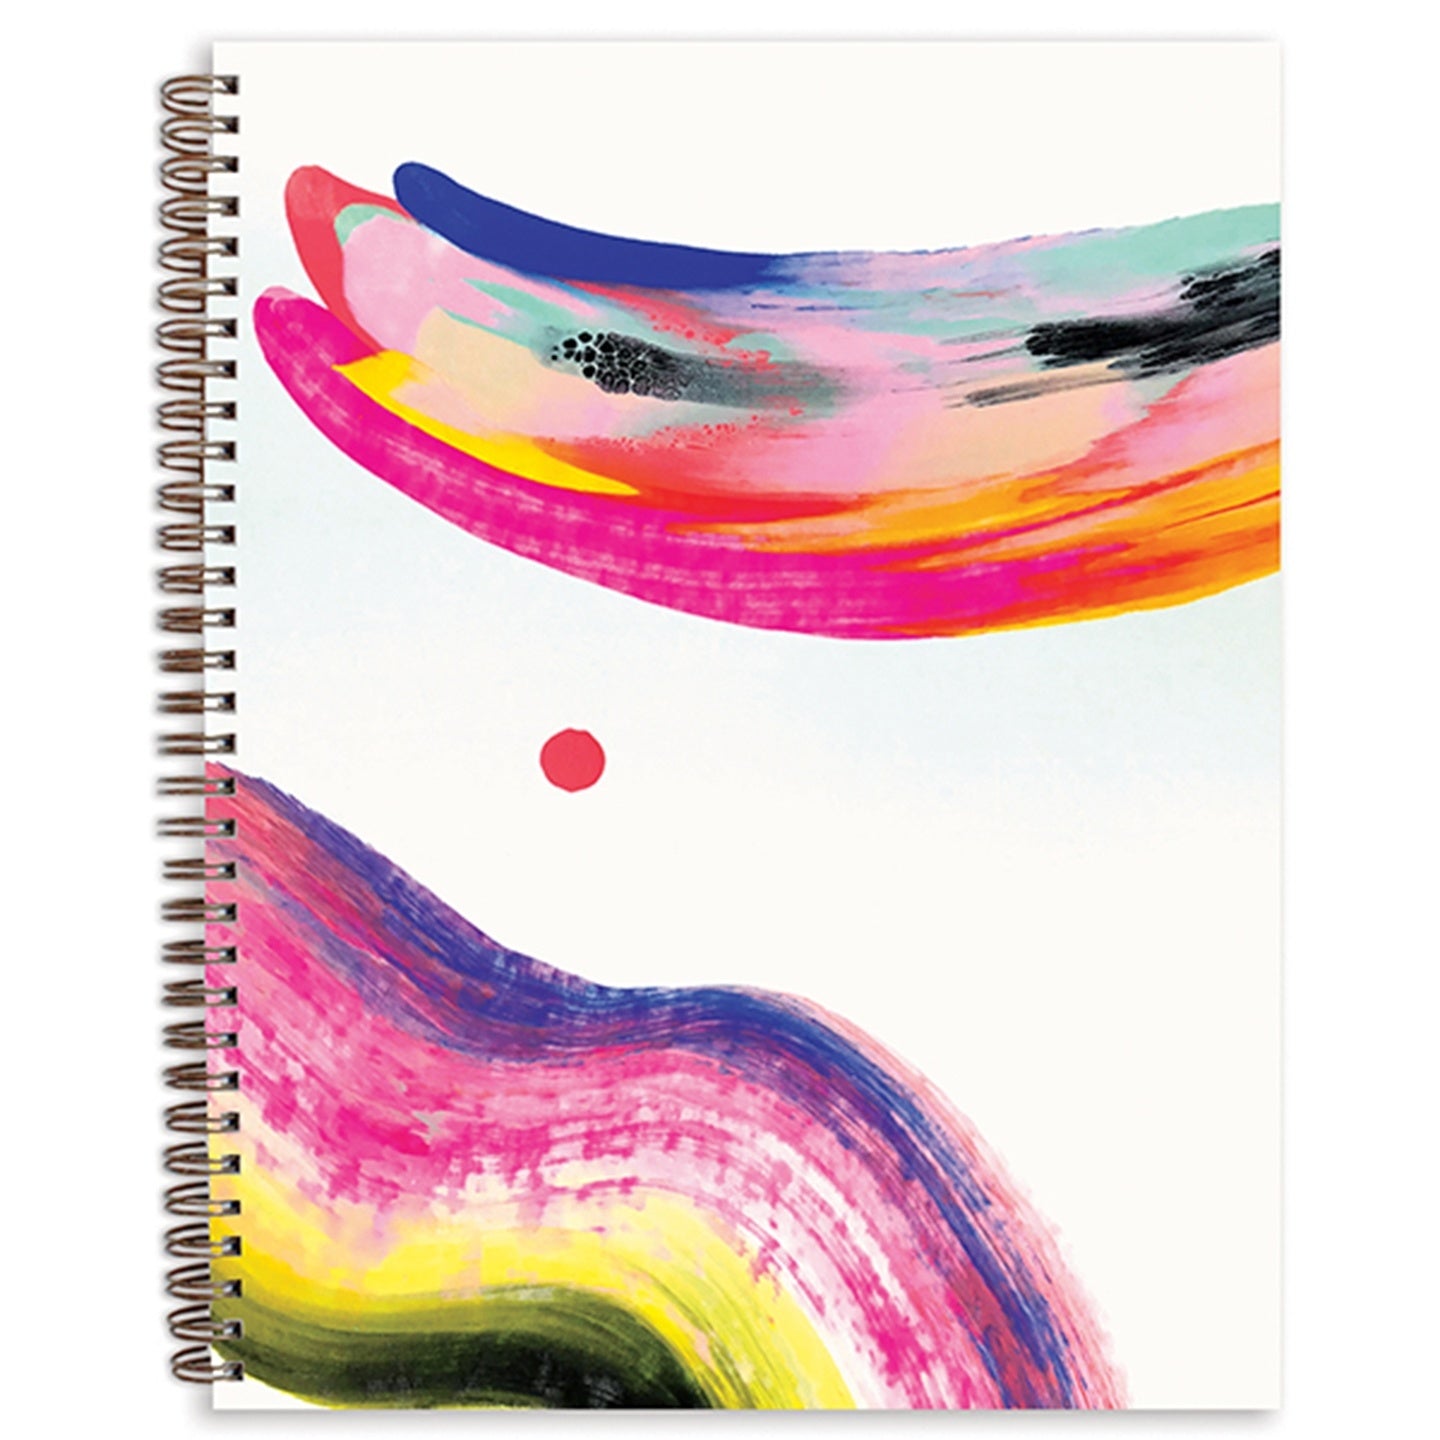 Painted Sketchbook Candy Swirl - Blank